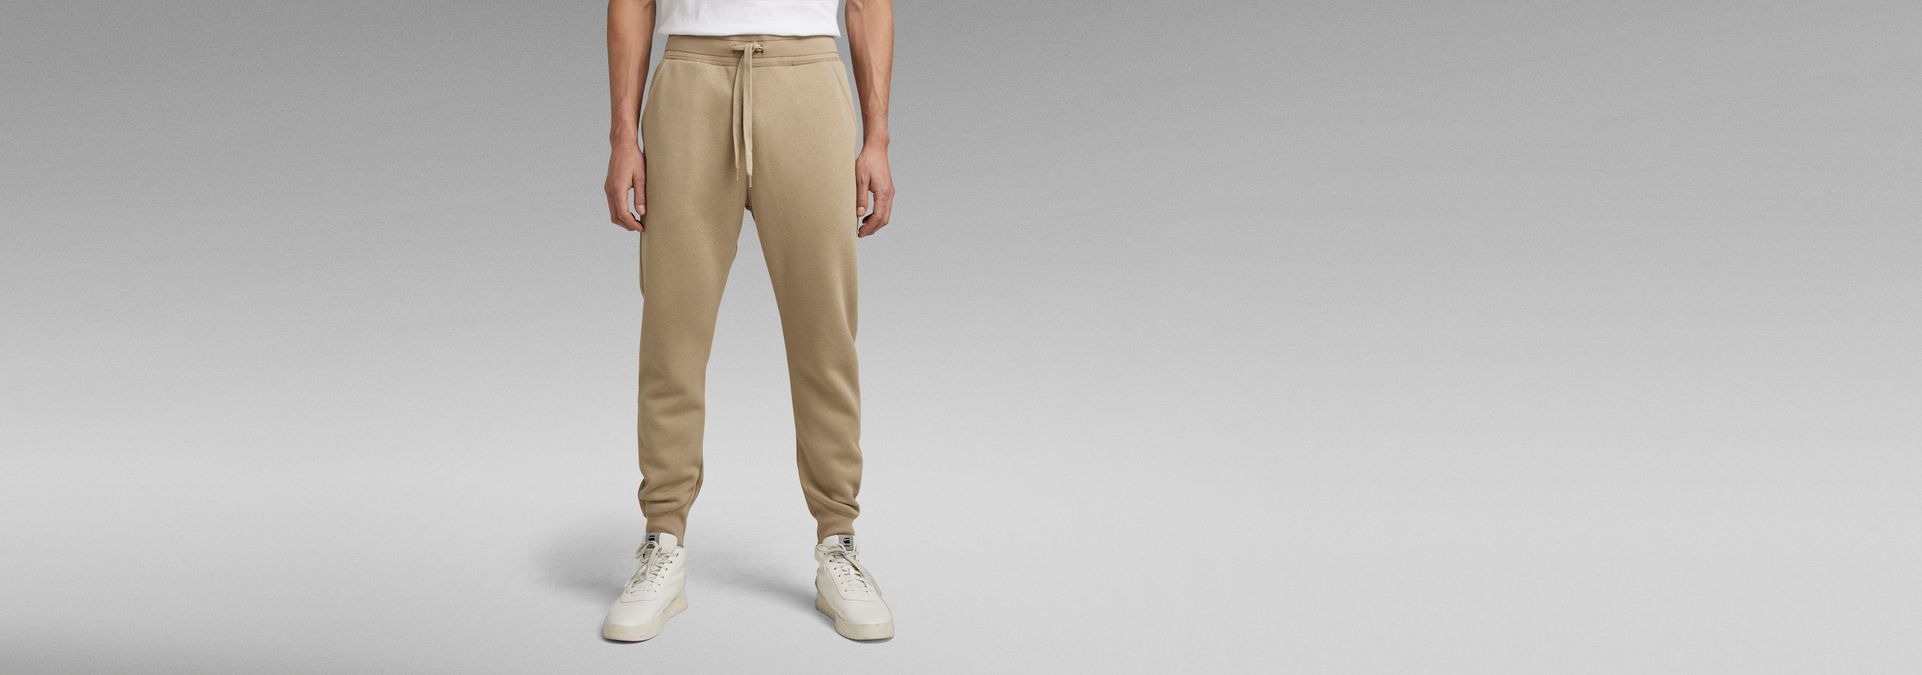 G-Star Premium Core Type C sweatpants Price: $110 USD on G-Star